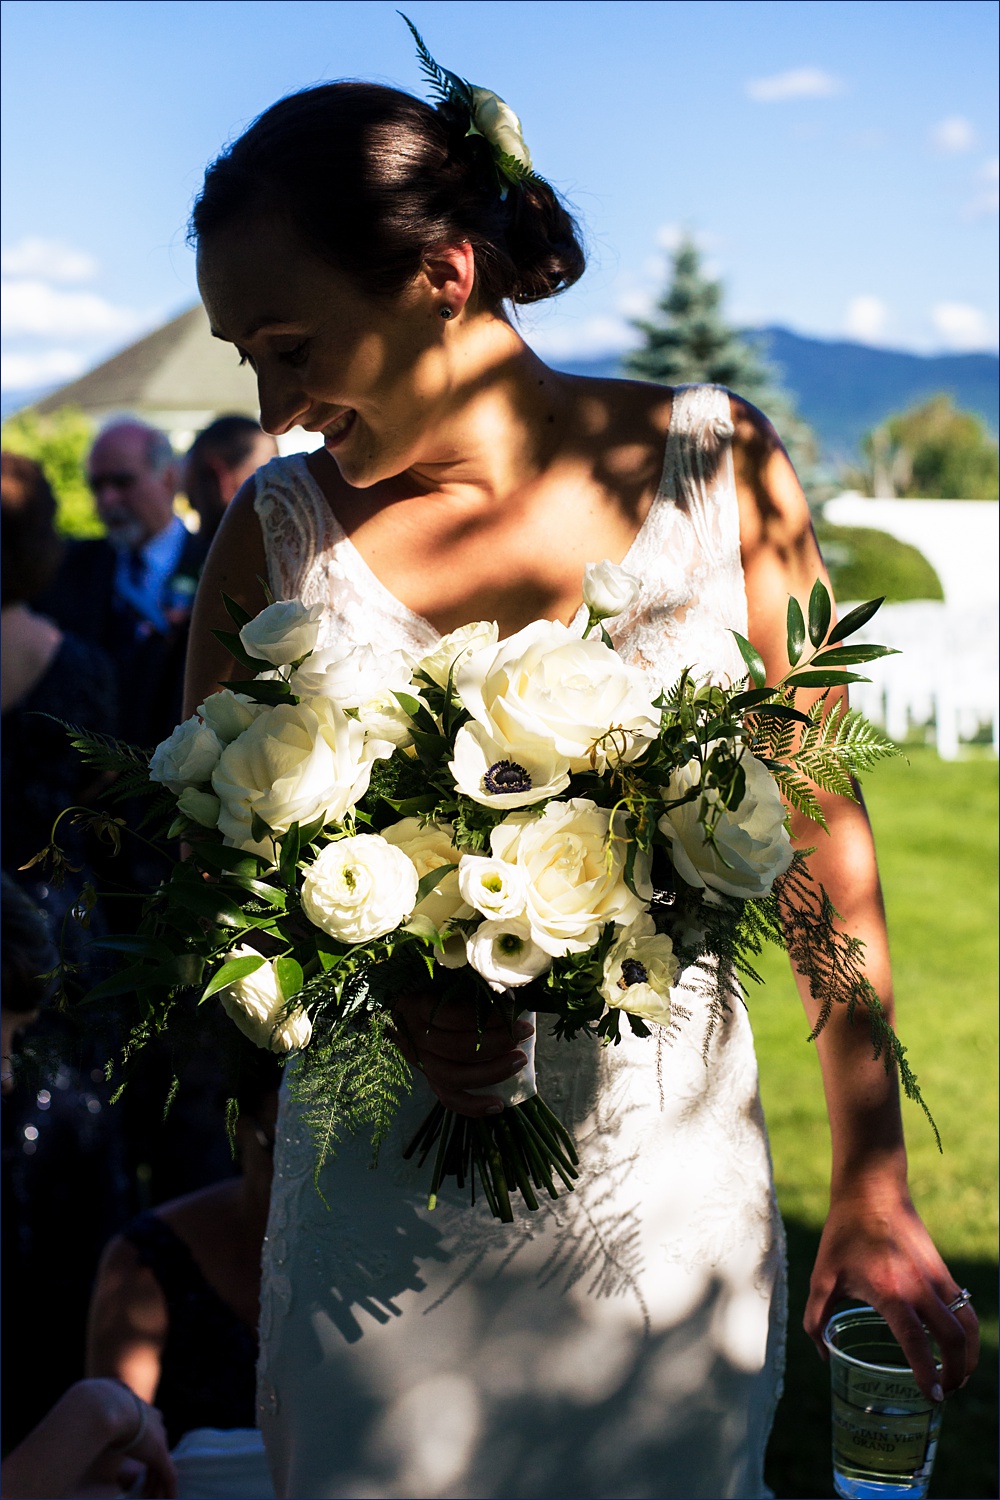 The bridal wedding flowers